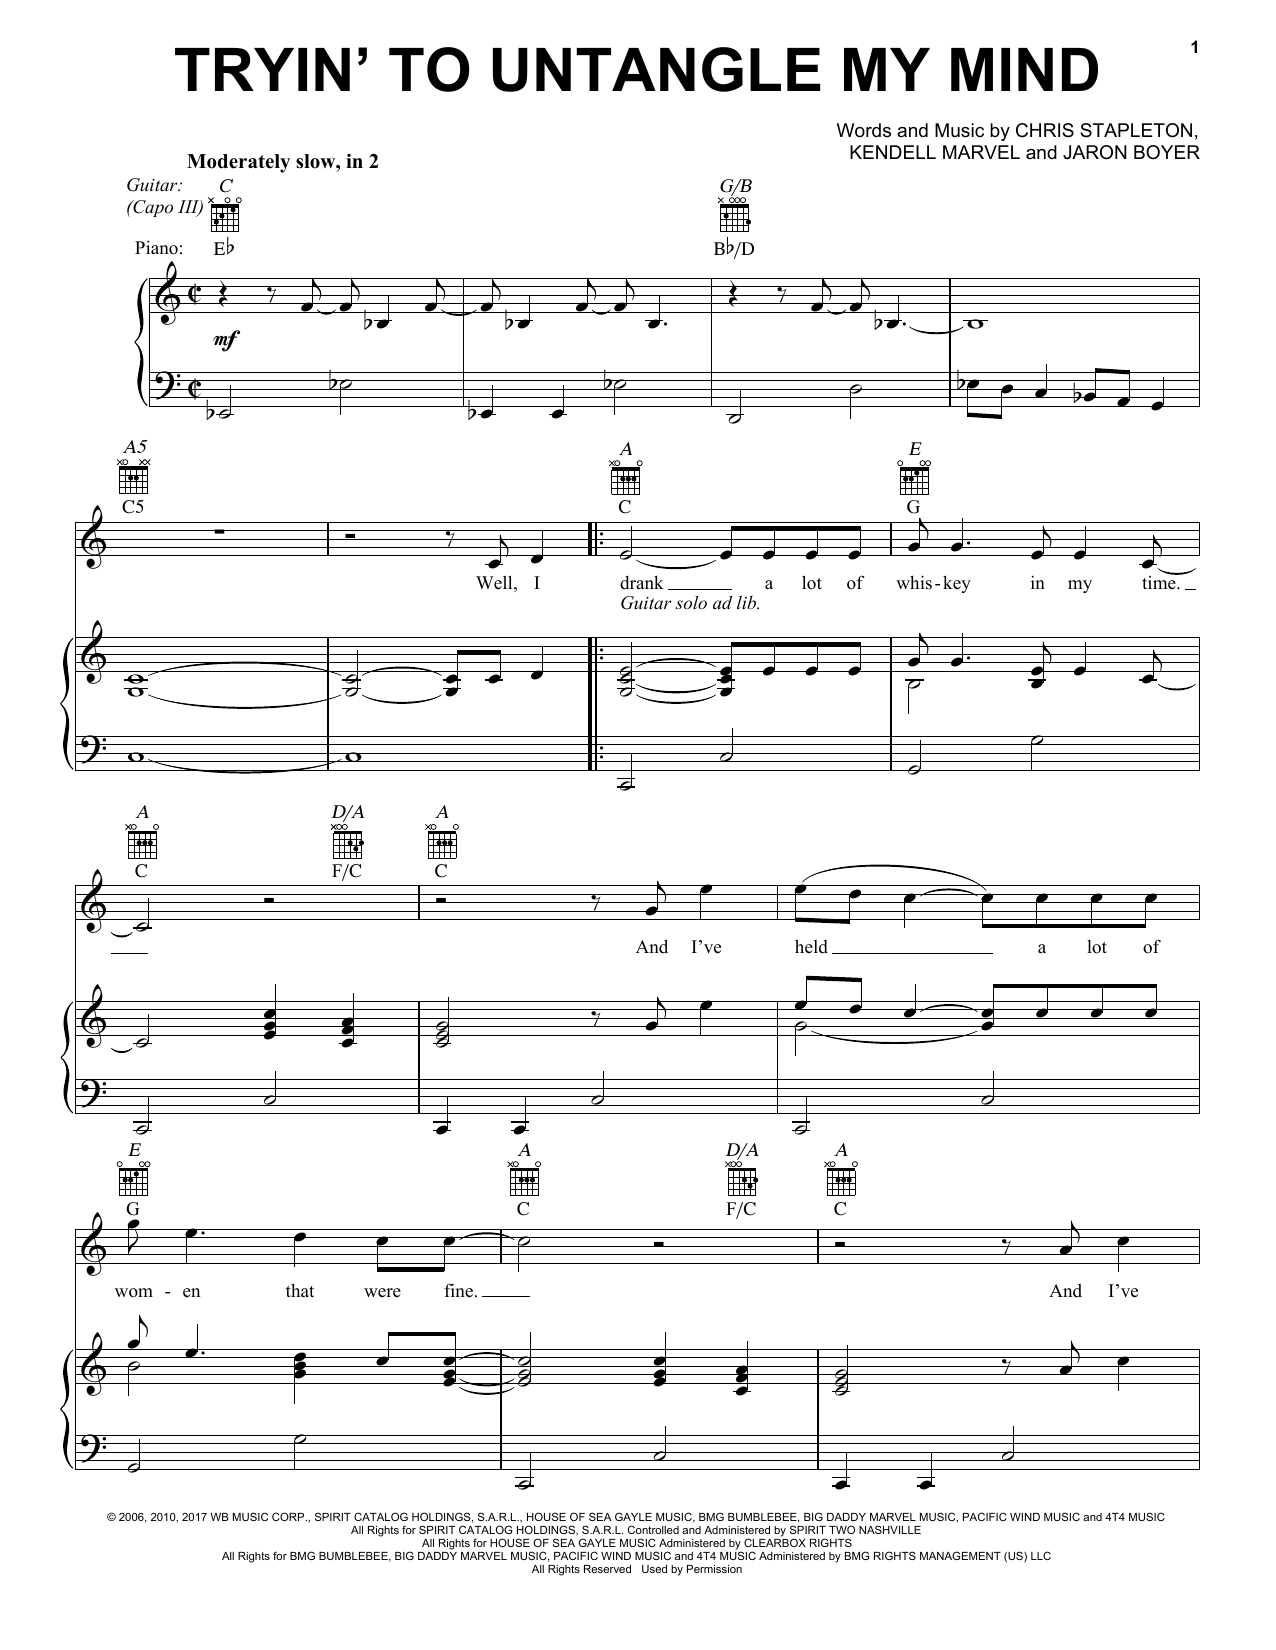 Chris Stapleton Tryin' To Untangle My Mind Sheet Music Notes & Chords for Guitar Chords/Lyrics - Download or Print PDF